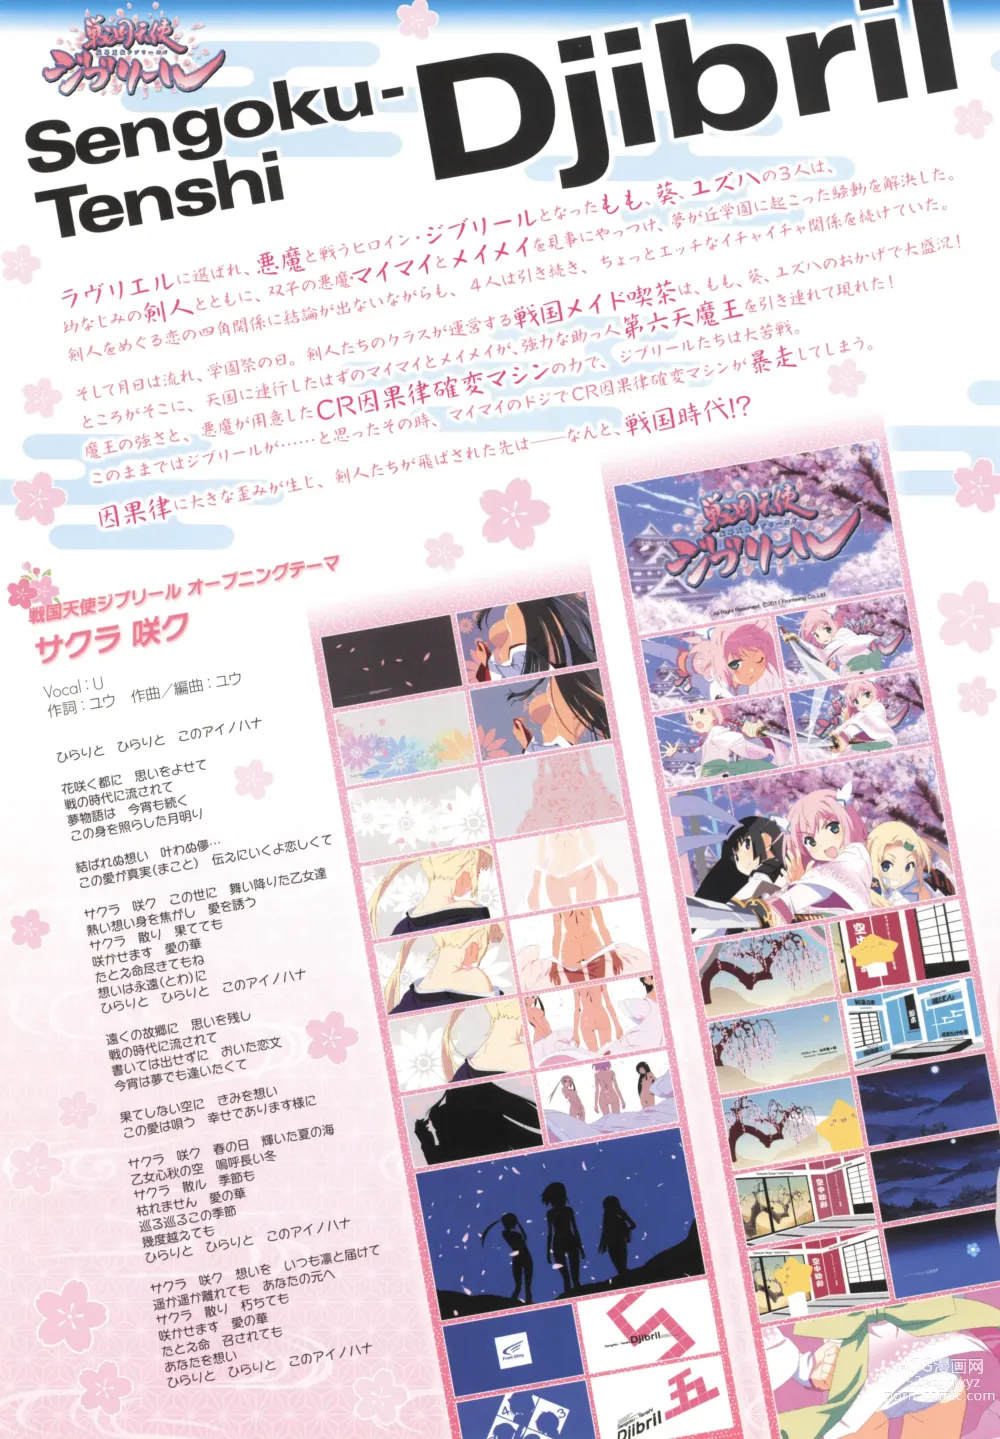 Page 6 of manga Sengoku Tenshi Djibril Official Fanbook